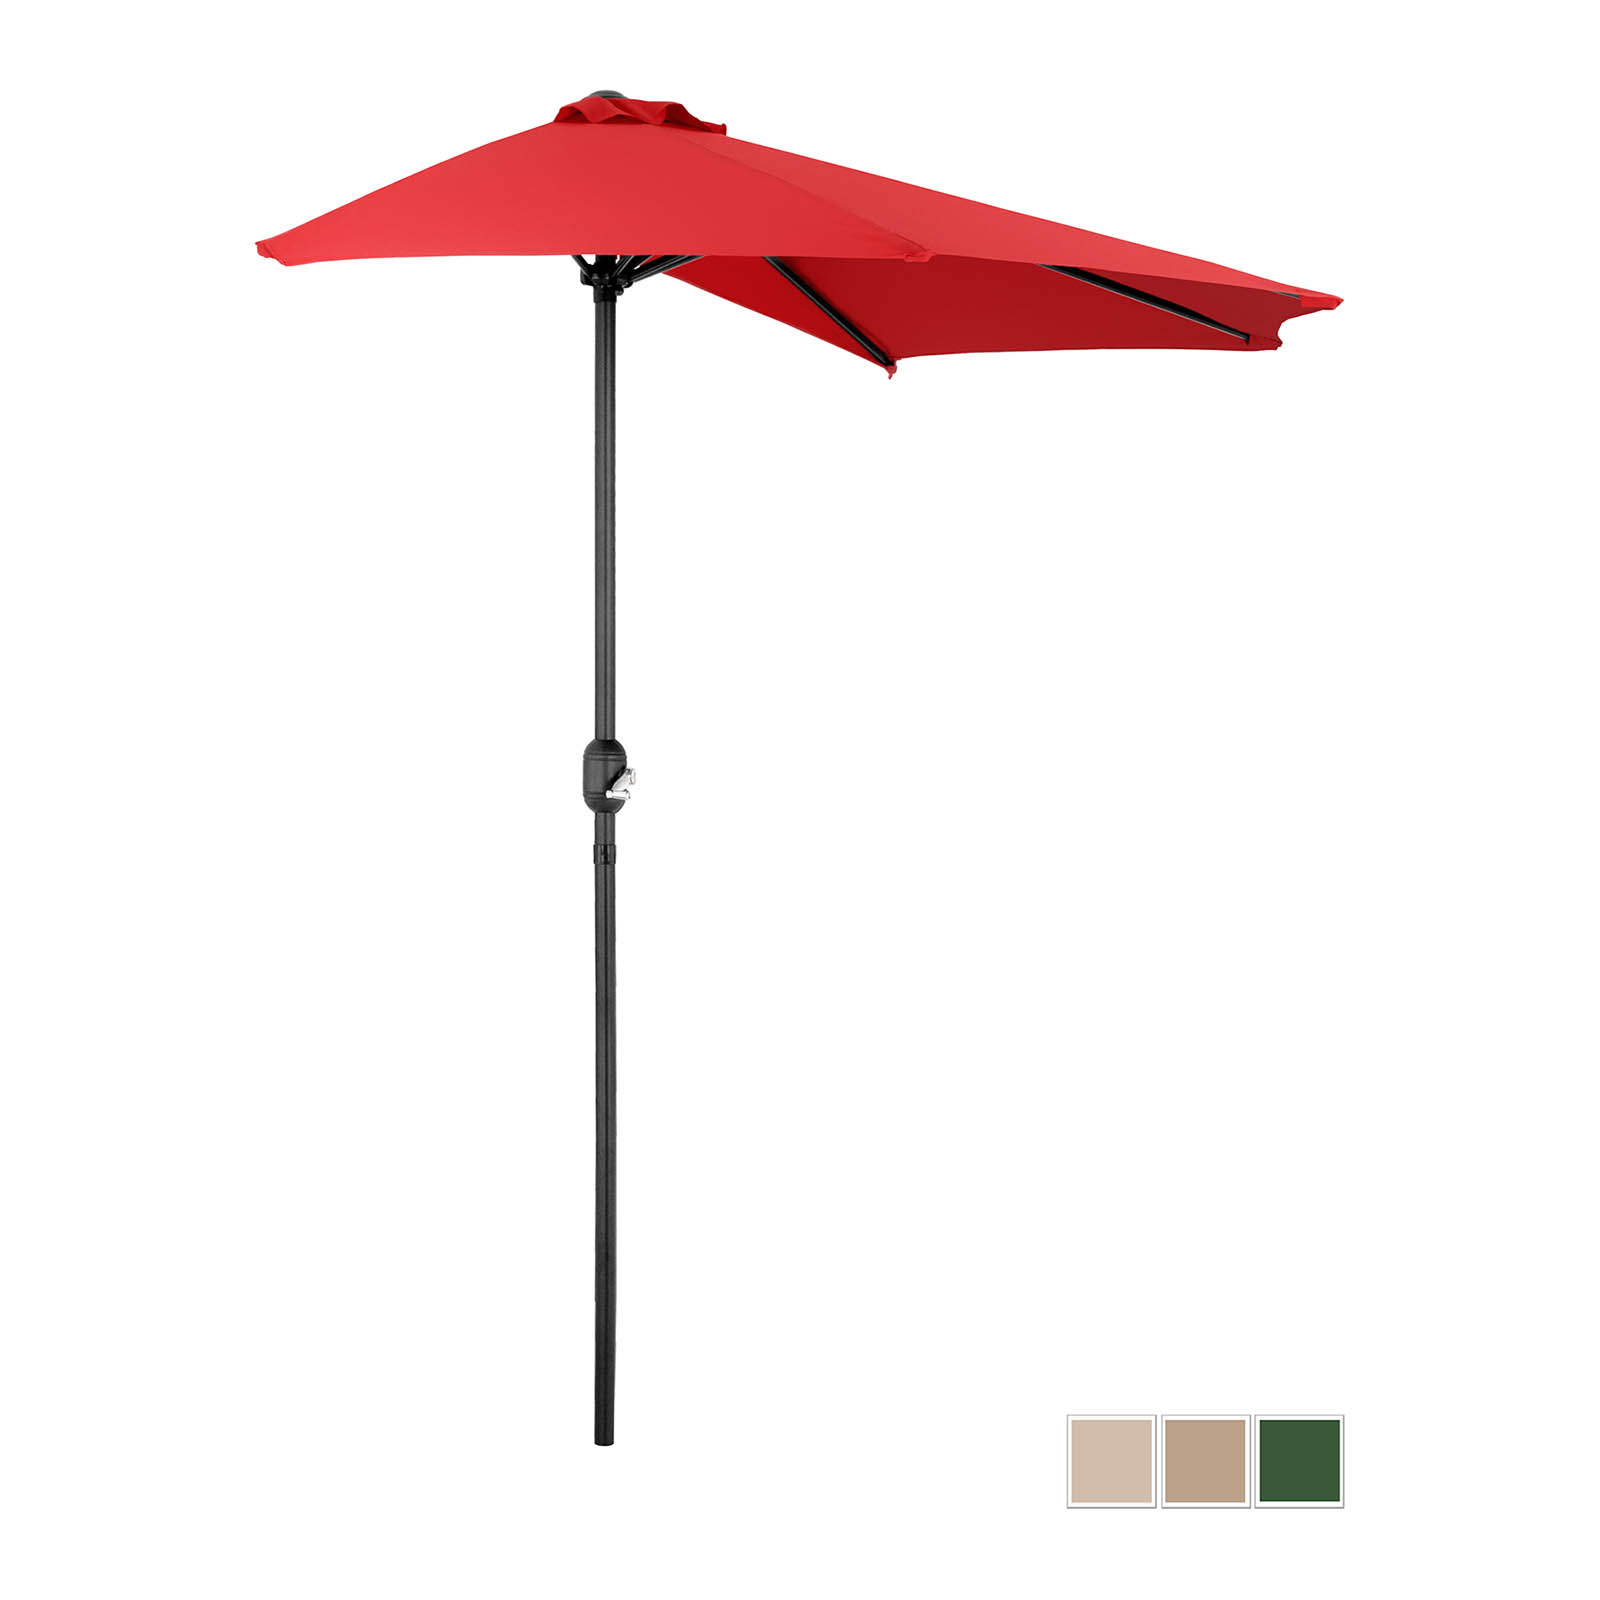 Halv parasol - Red - femkantet - 270 x 135 cm